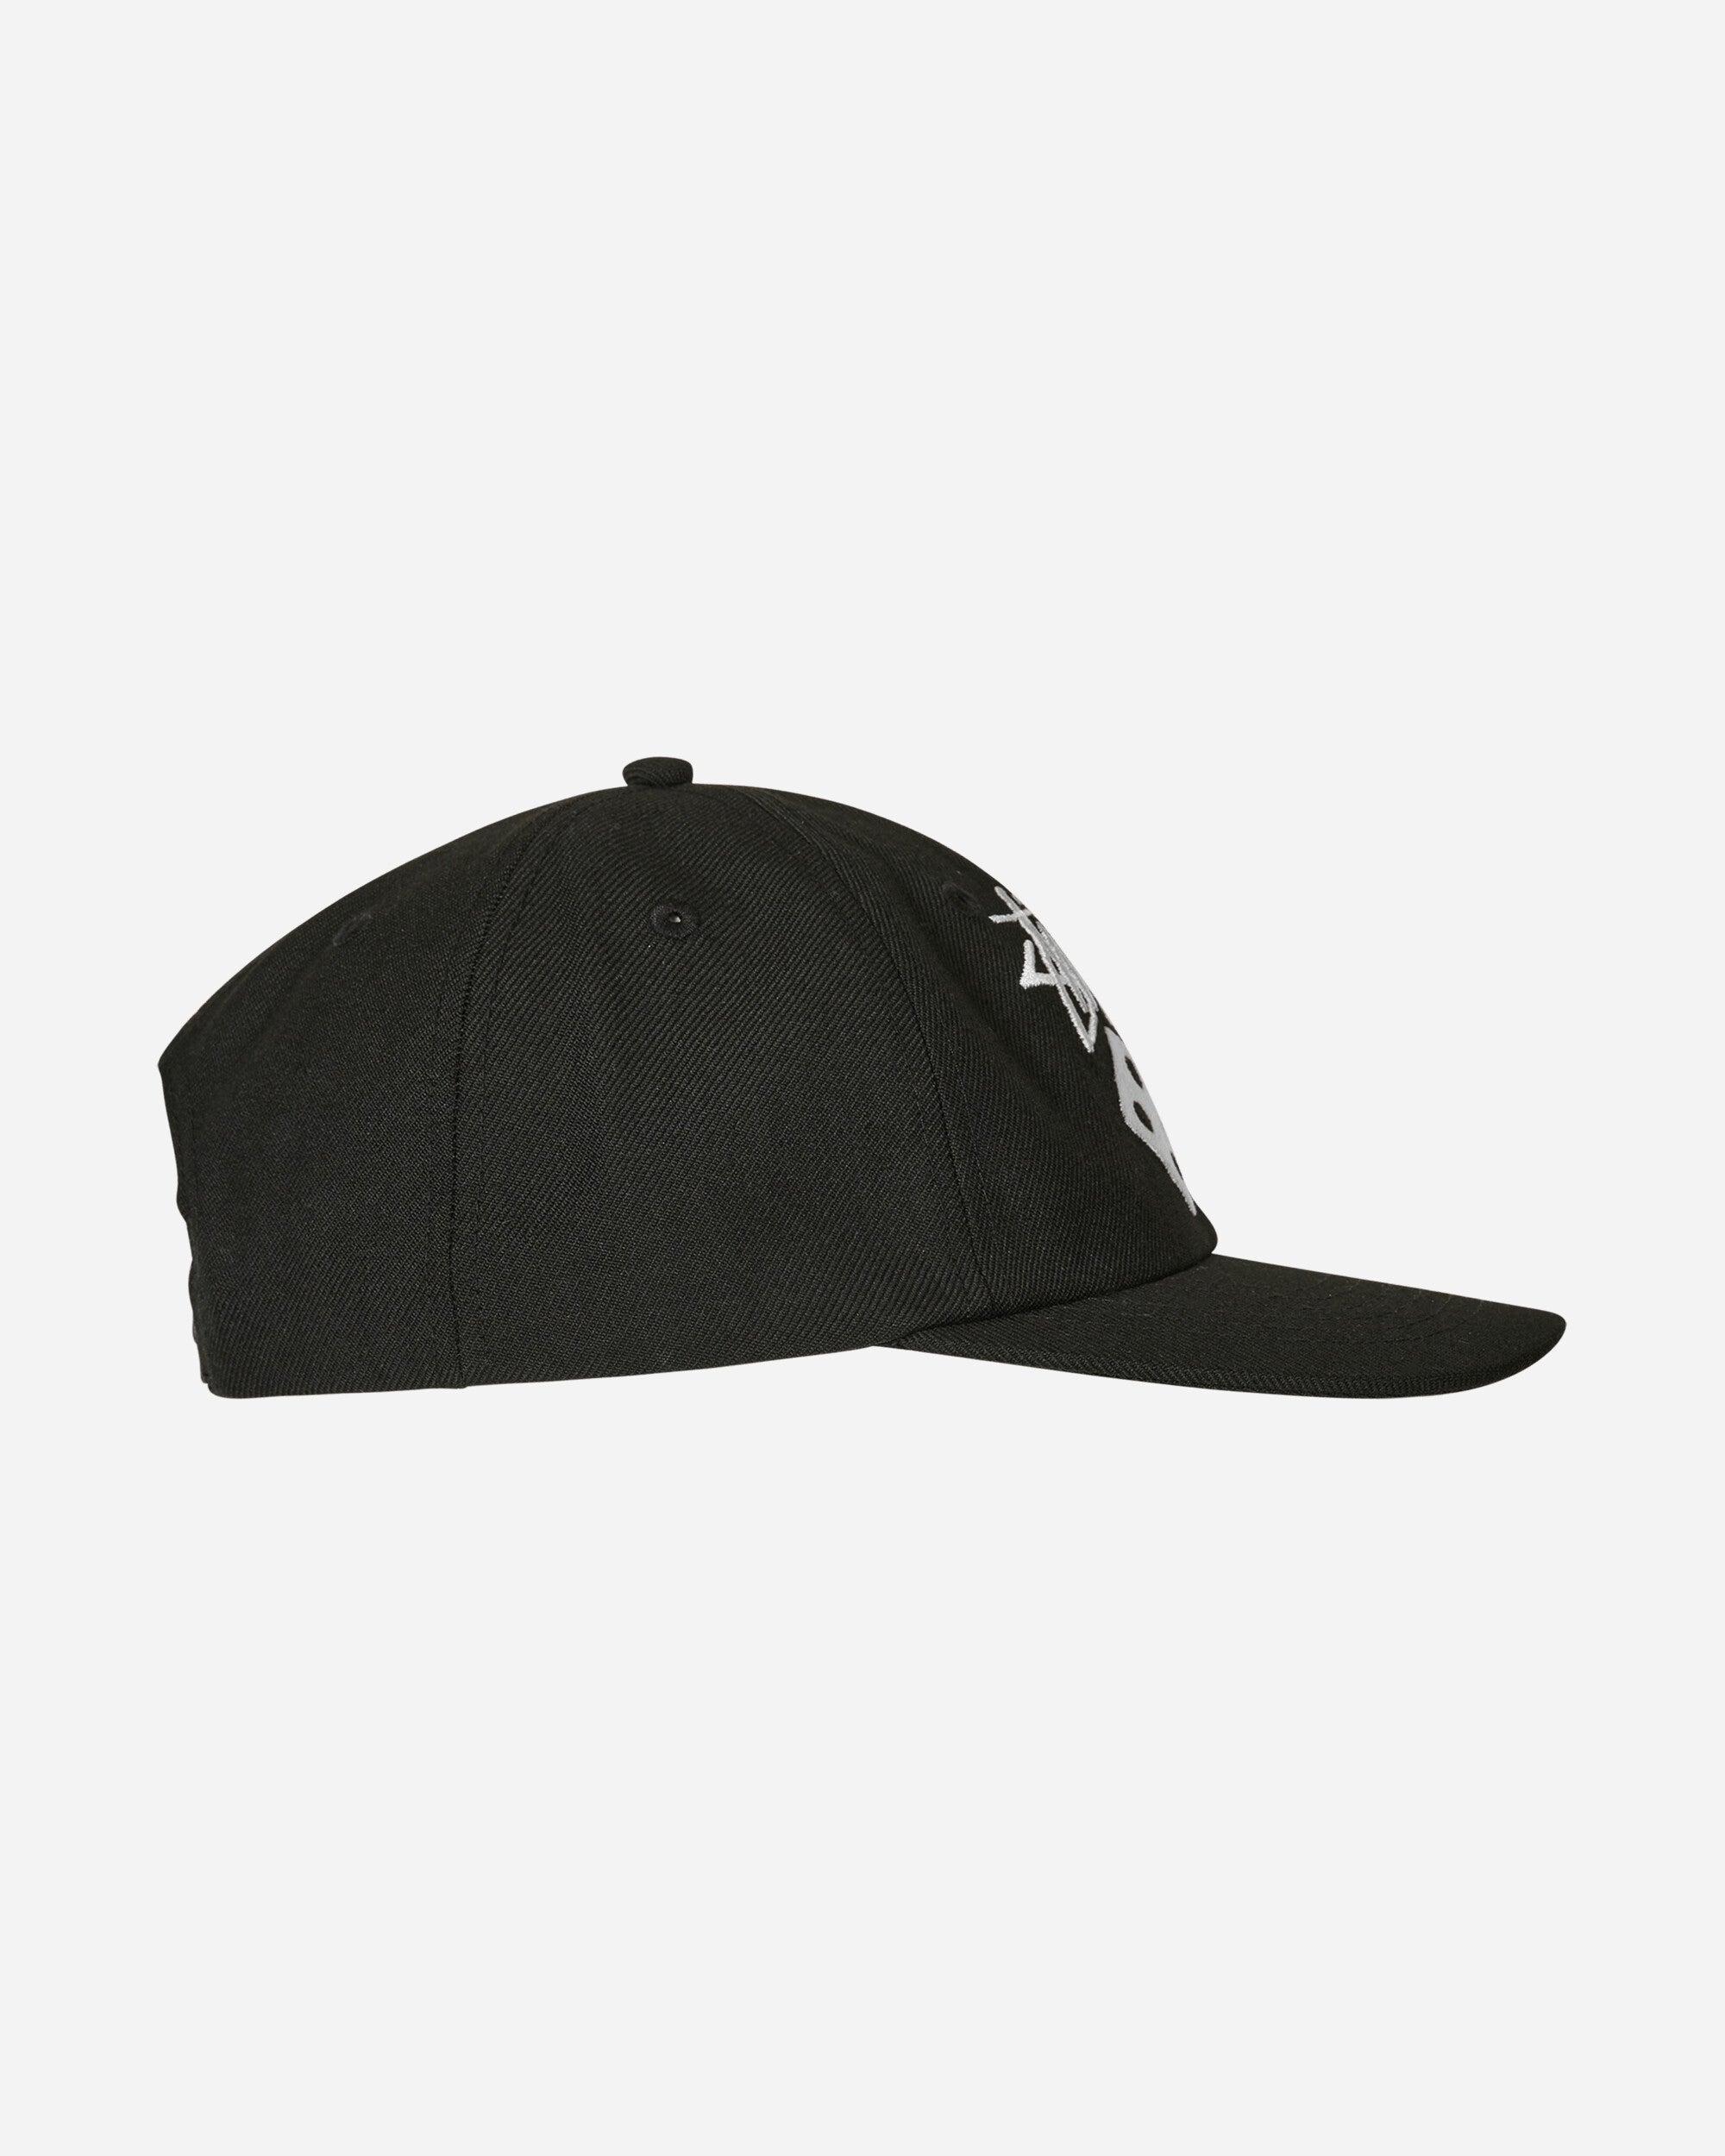 Stüssy Stock Dice Low Pro Cap Black Hats Caps 1311136 0001